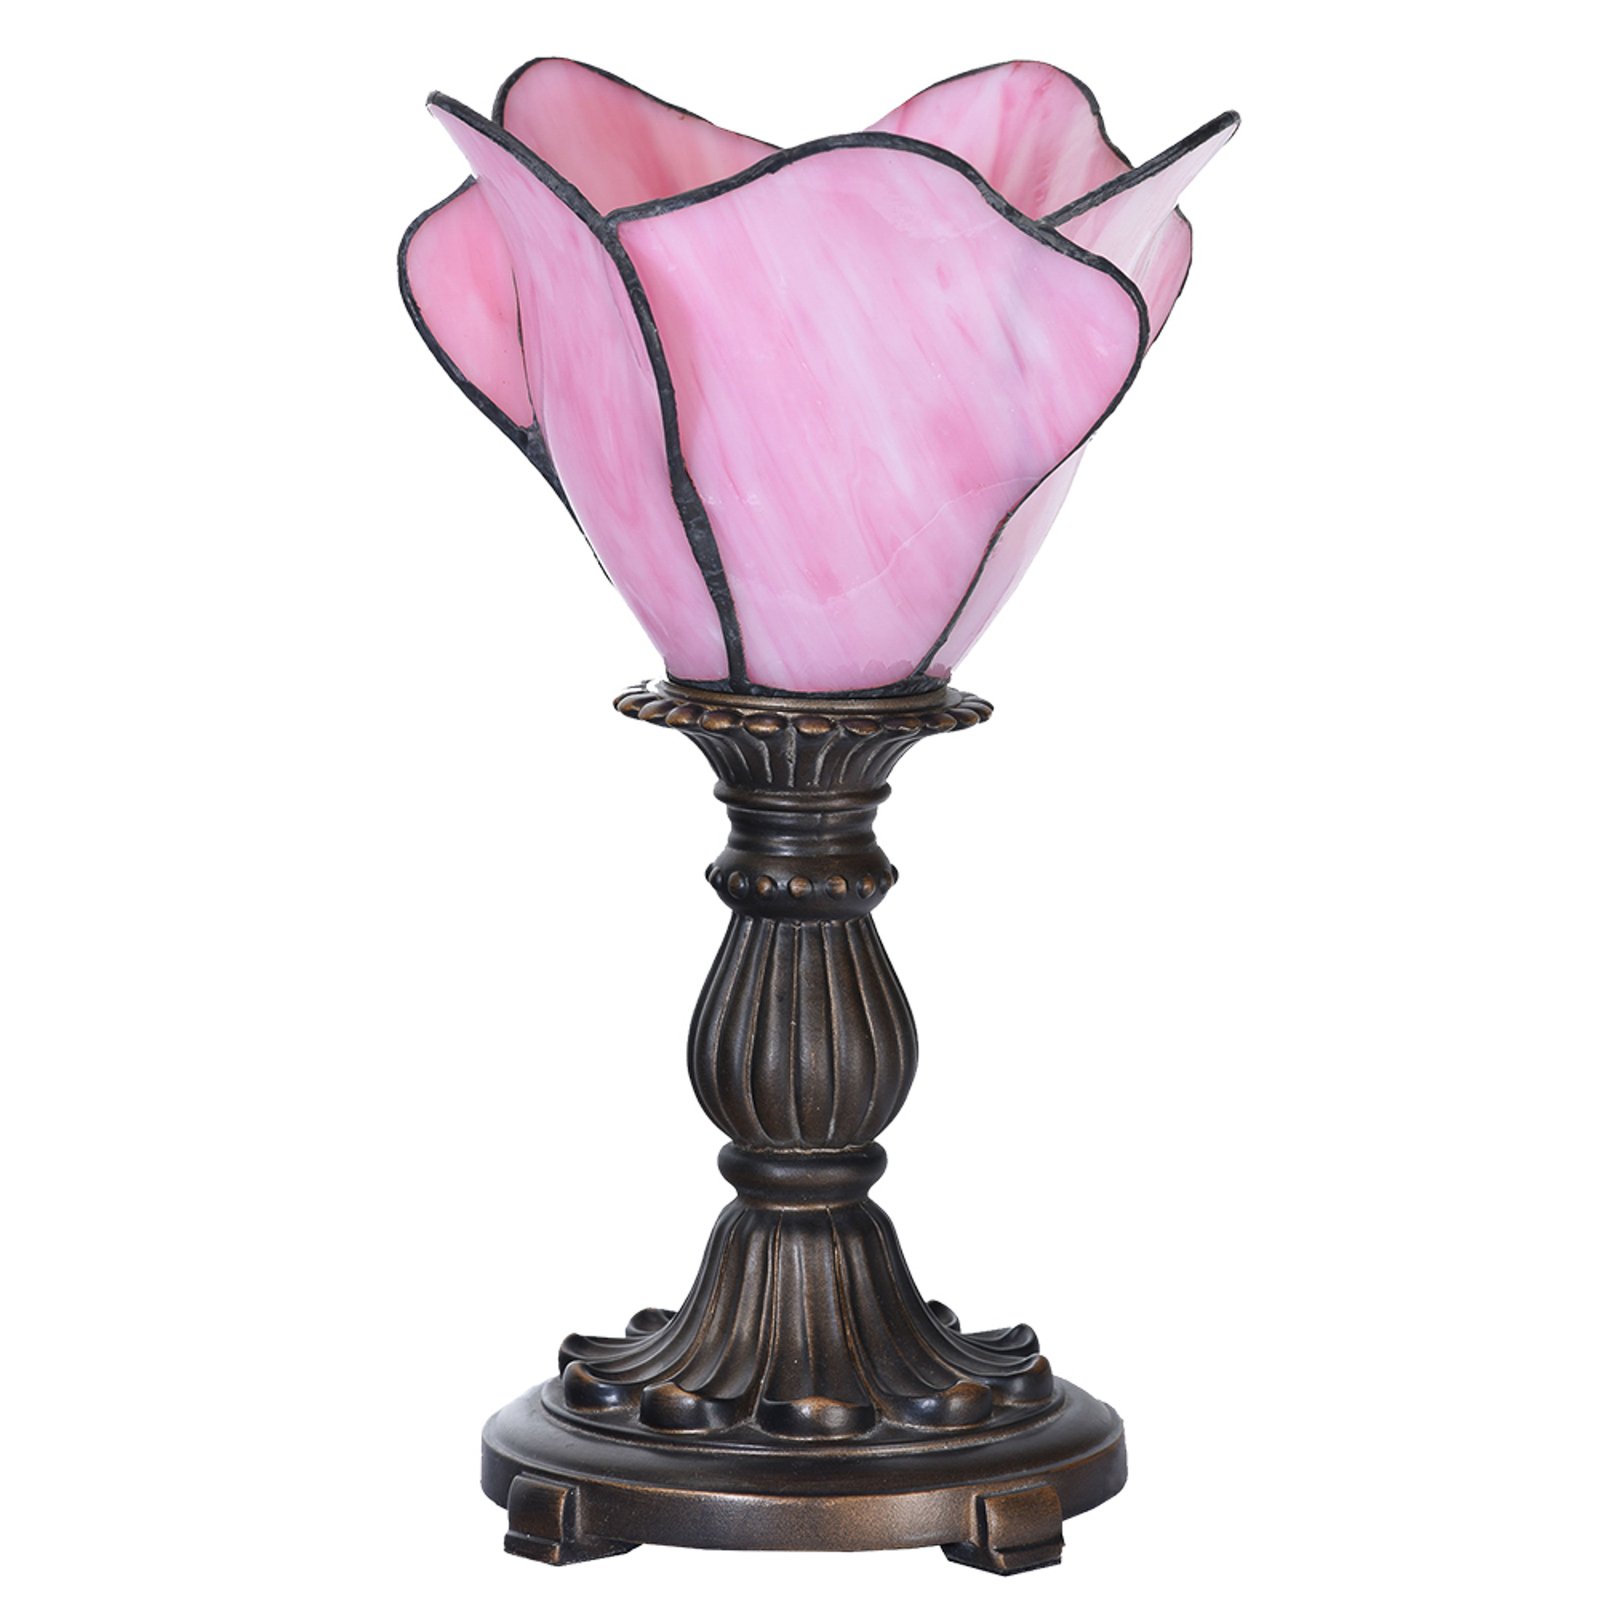 Lampe à poser 5LL-6099 en rose, style Tiffany